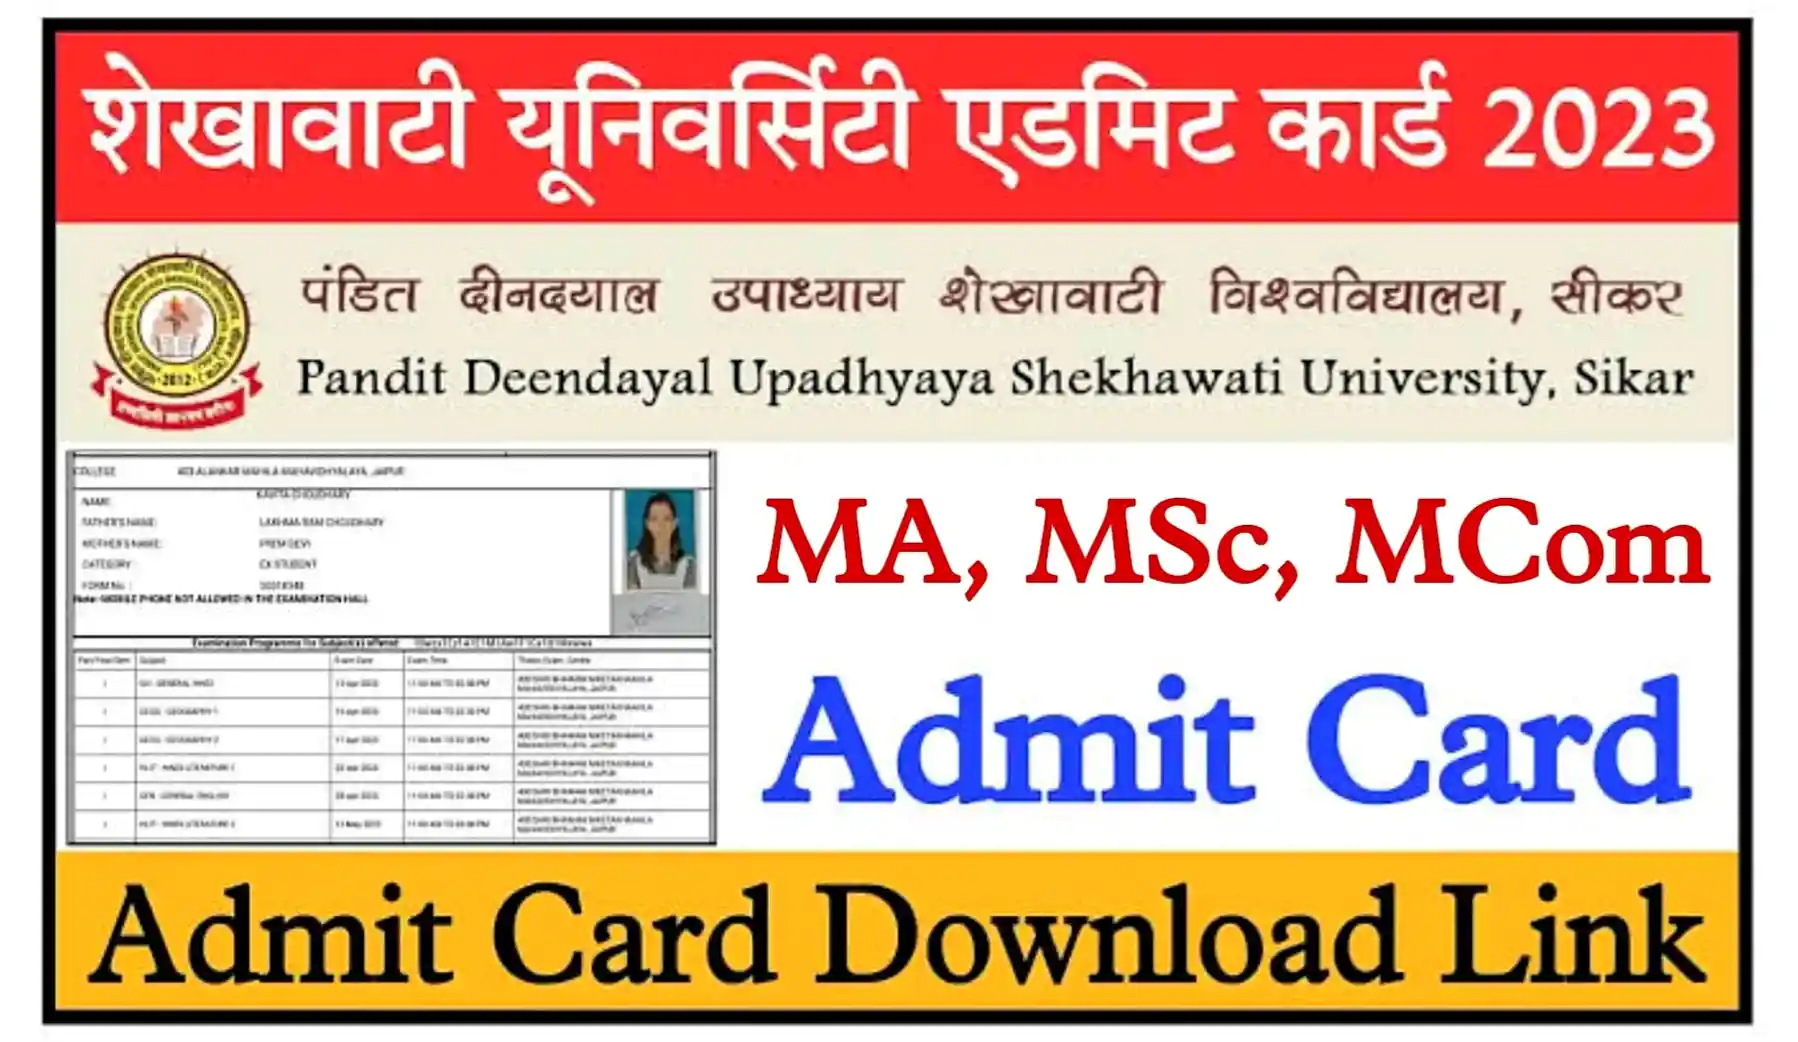 Shekhawati University Admit Card 2023 MA, MSc, MCom Download Link PDUSU Admit Card 2023 Name Wise